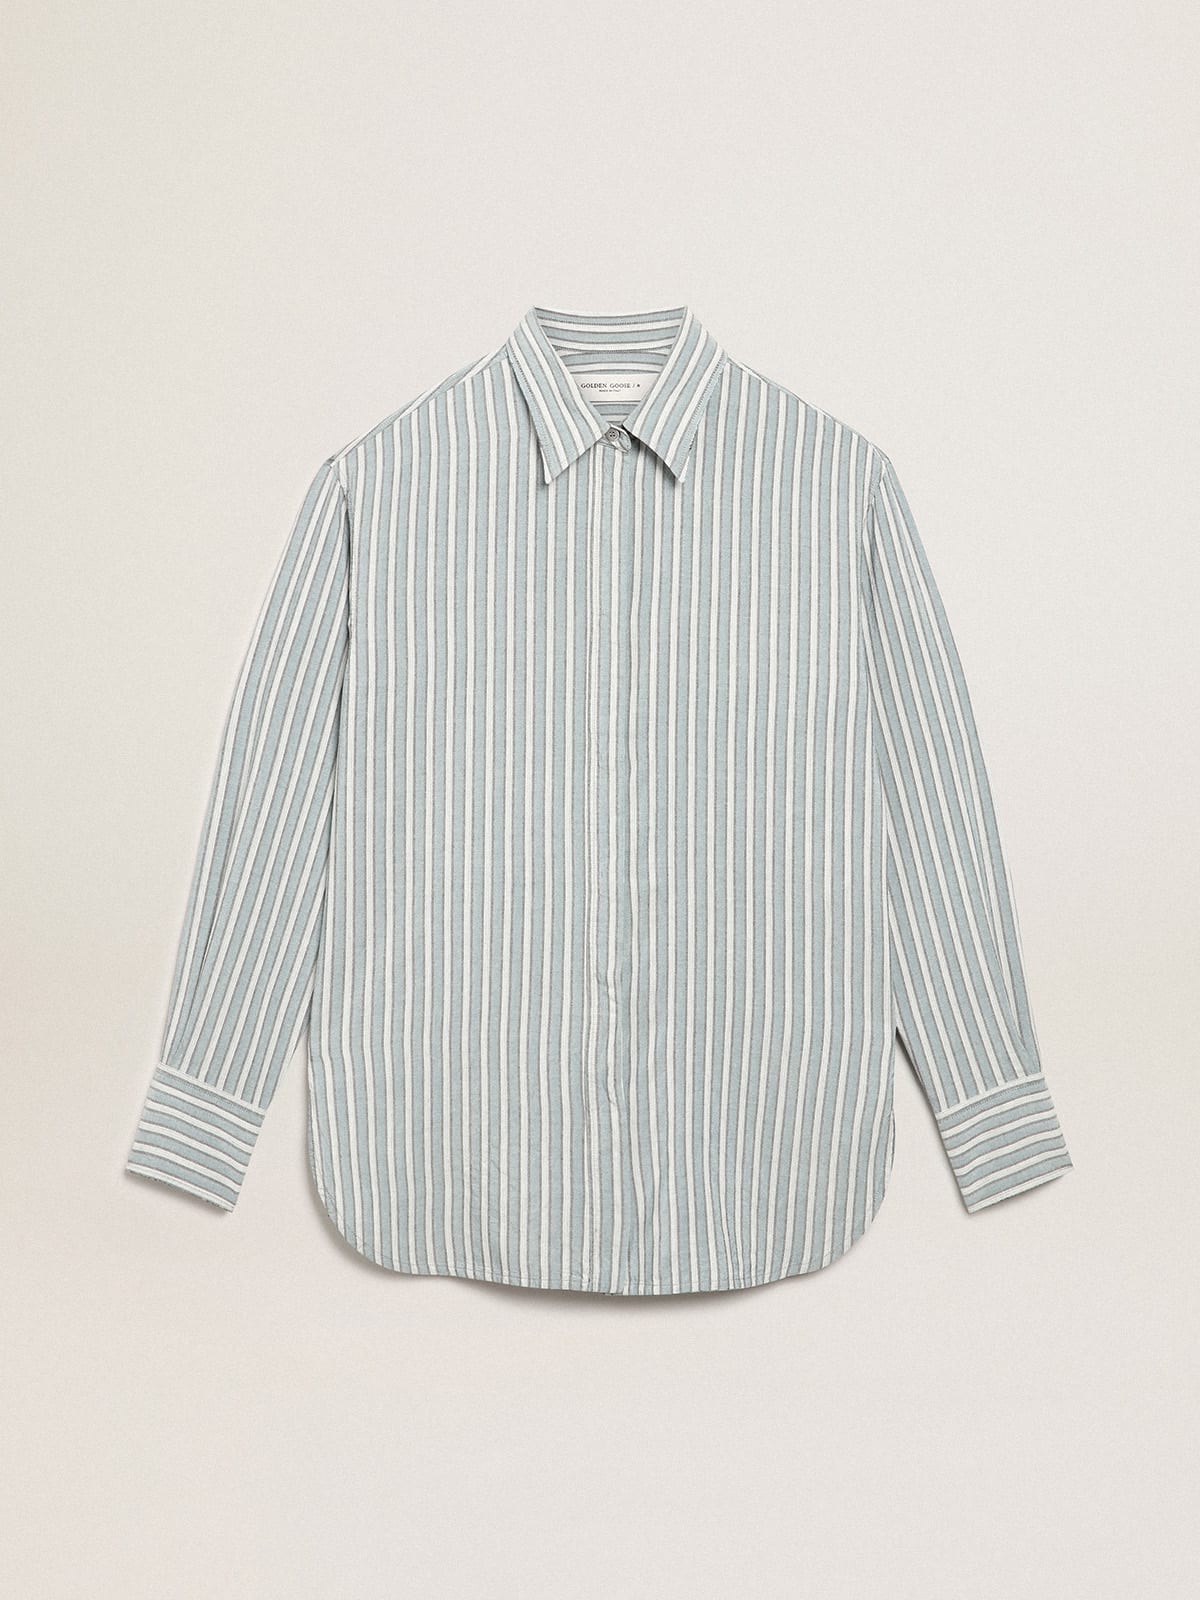 Journey Collection women's boyfriend shirt with aqua stripes